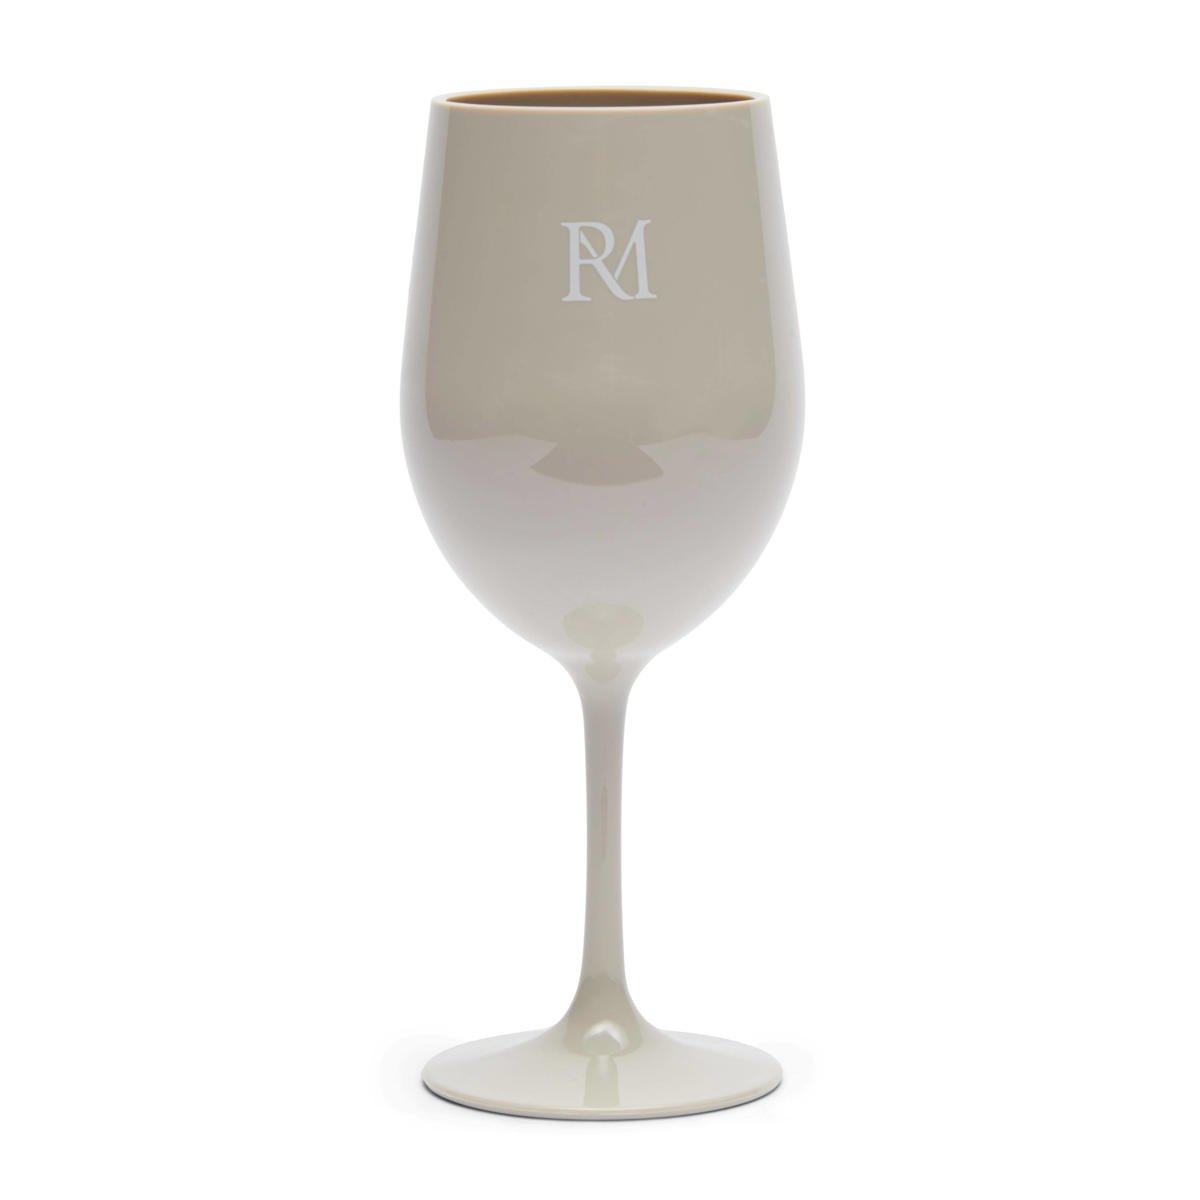 Riviera Maison wijnglas RM Monogram | wehkamp